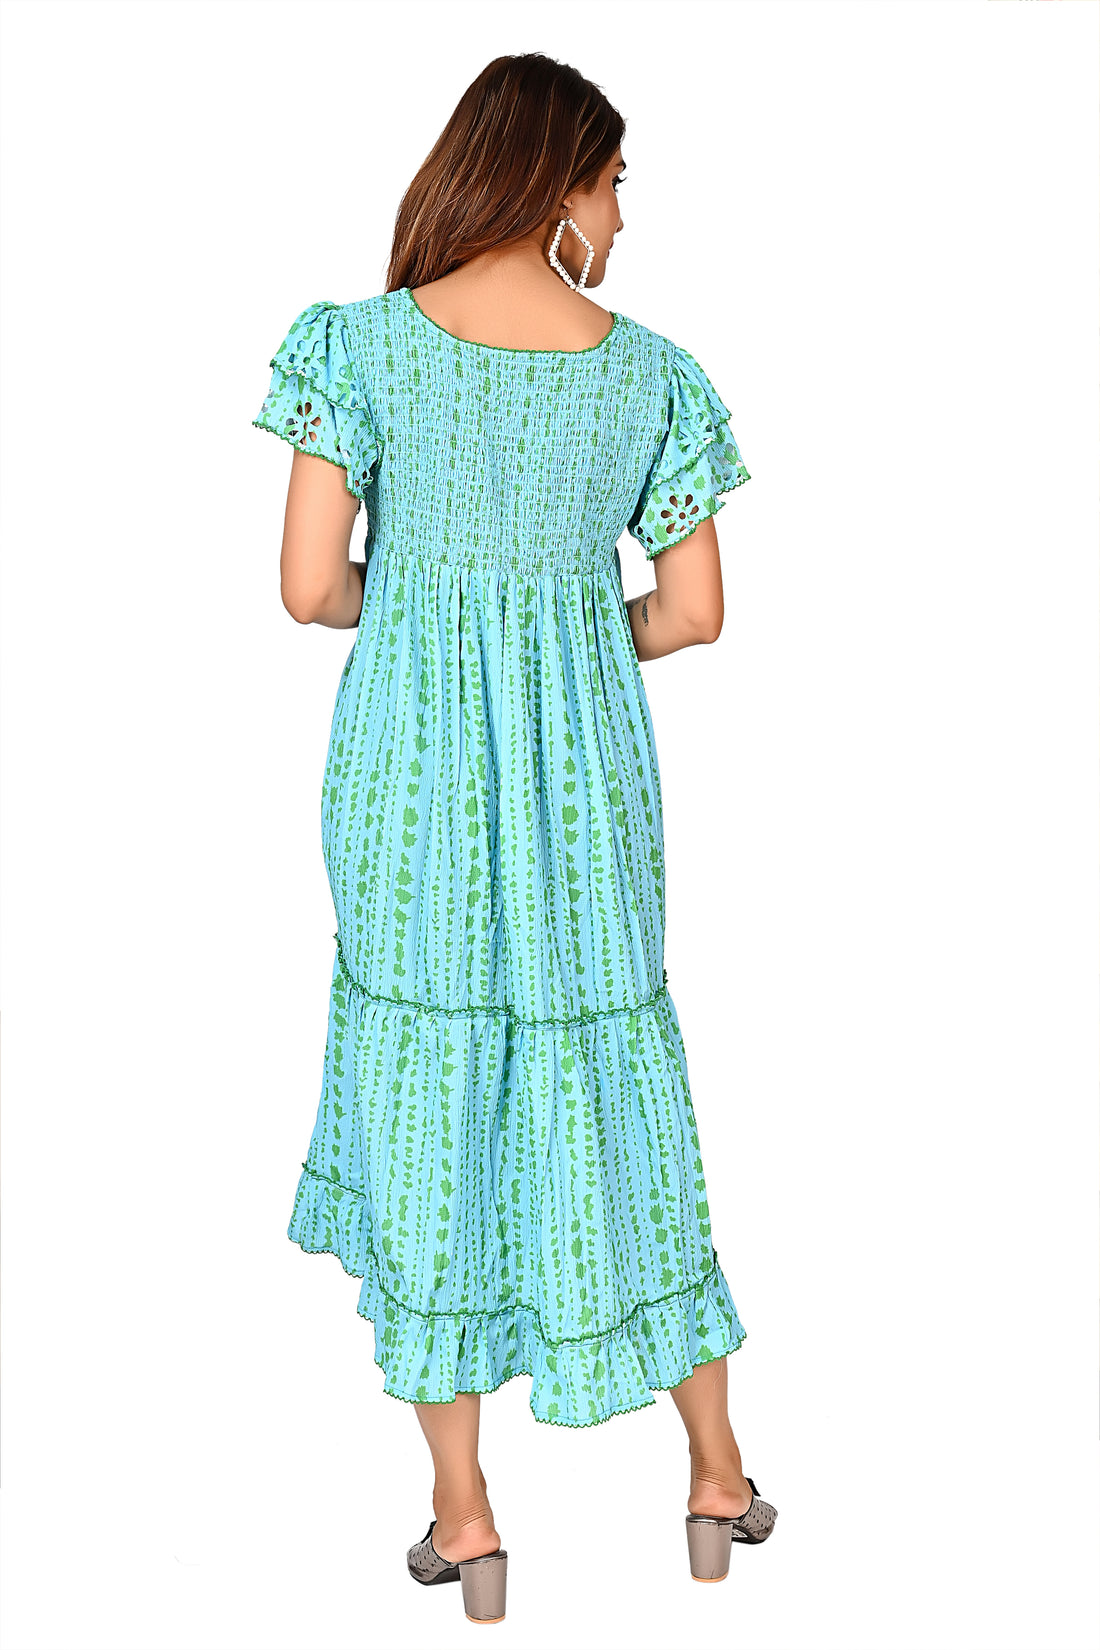 Nirmal online Premium Quality Dress for Women in Aqua Blue Colour Print